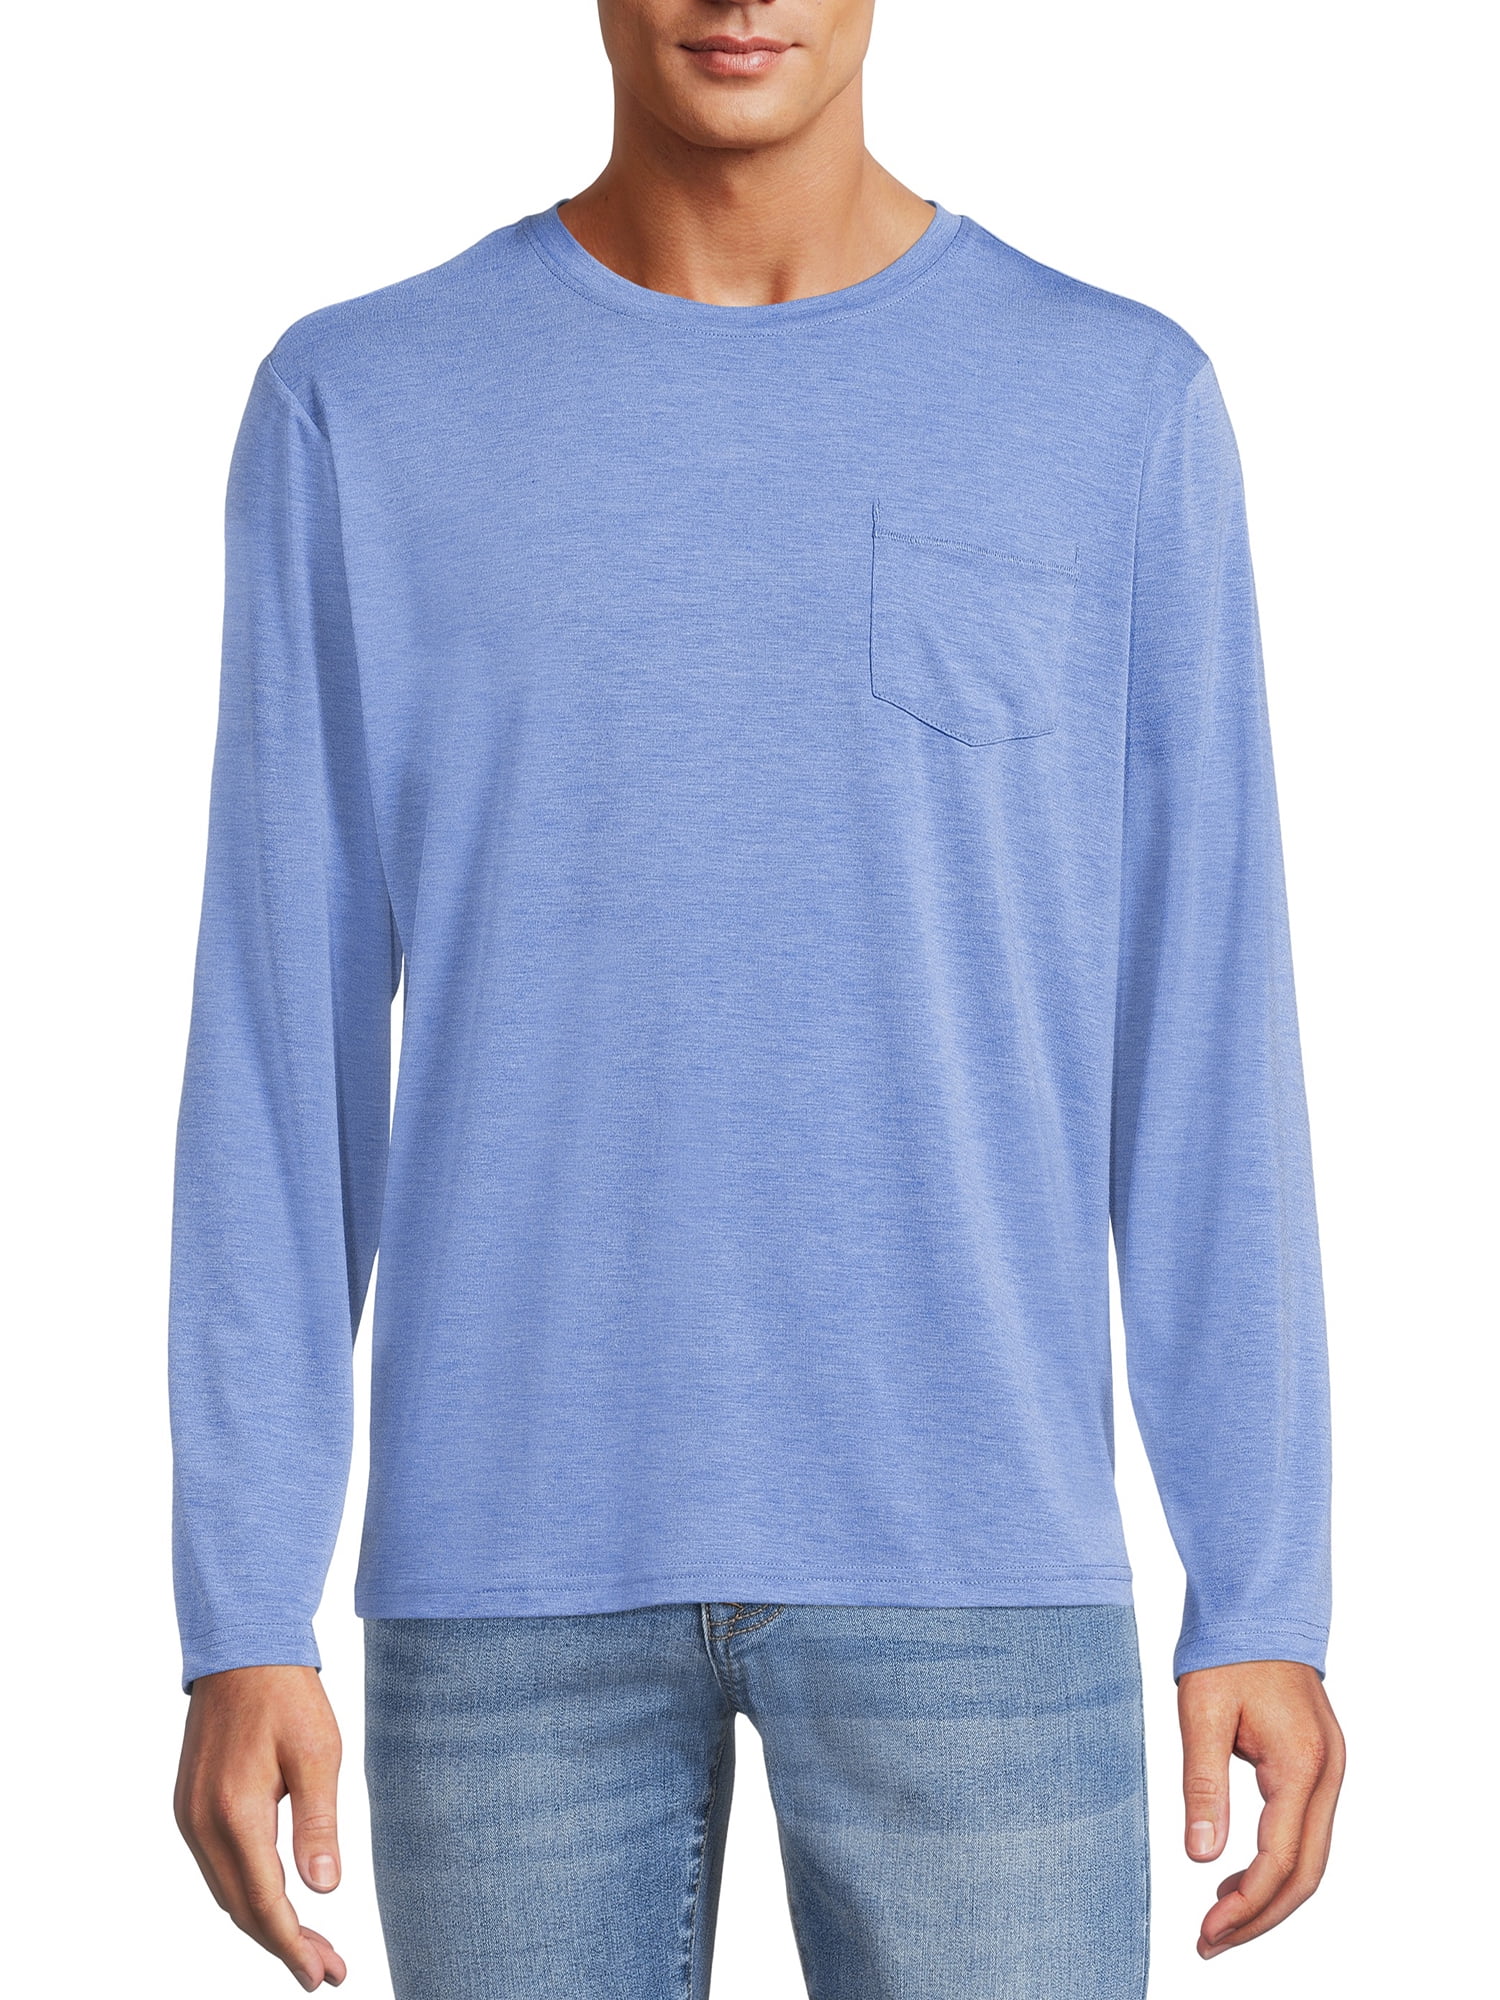 George Men's Long Sleeve Lounge Pocket T-Shirt - Walmart.com